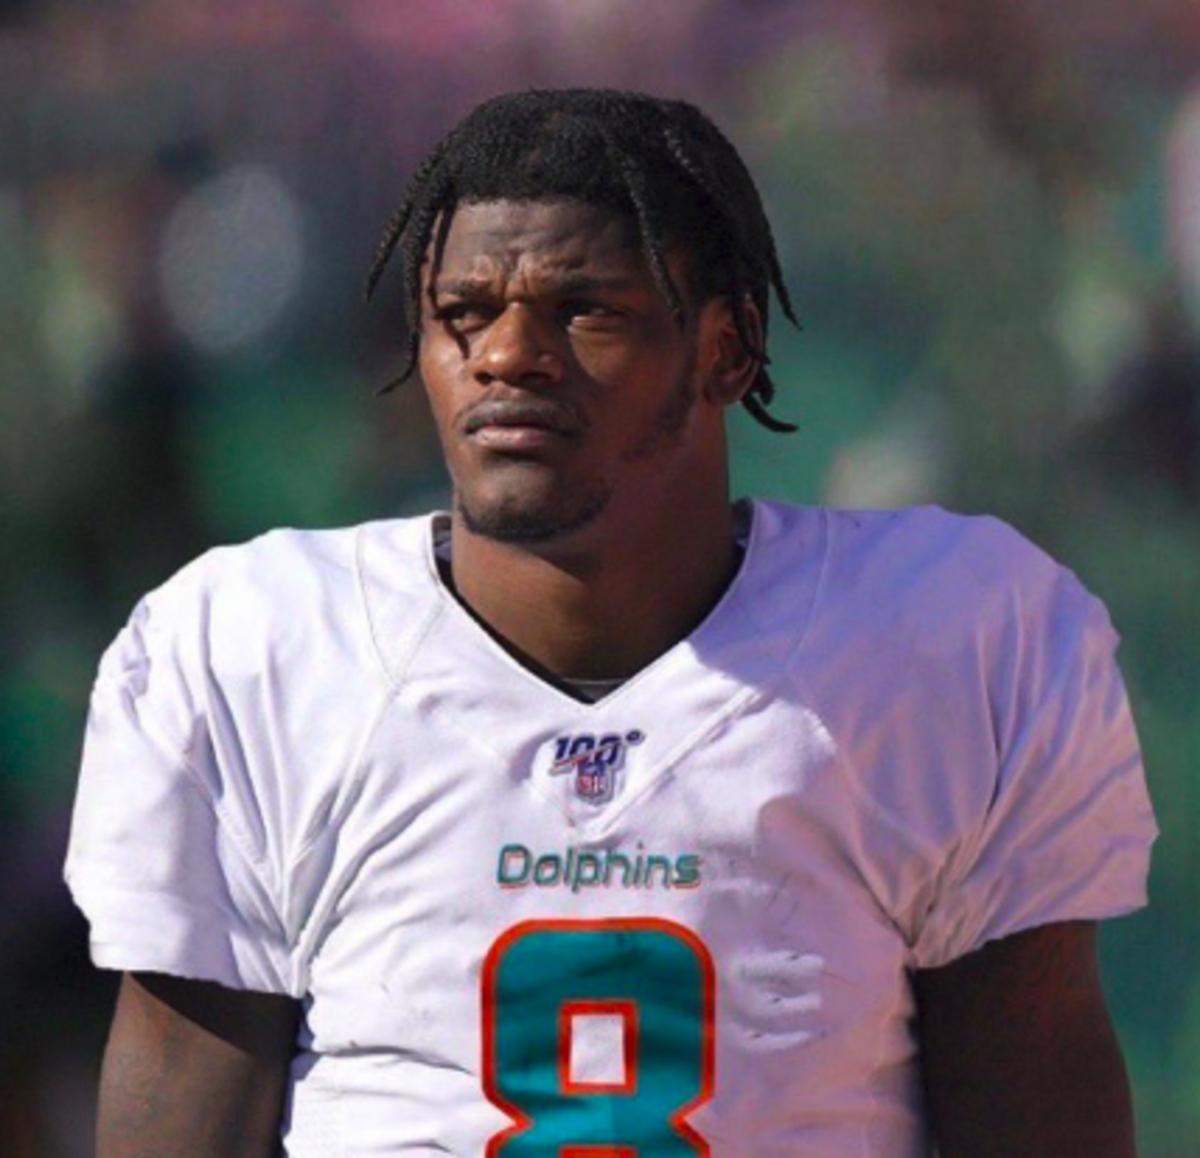 Could Miami Dolphins pursue Lamar Jackson?